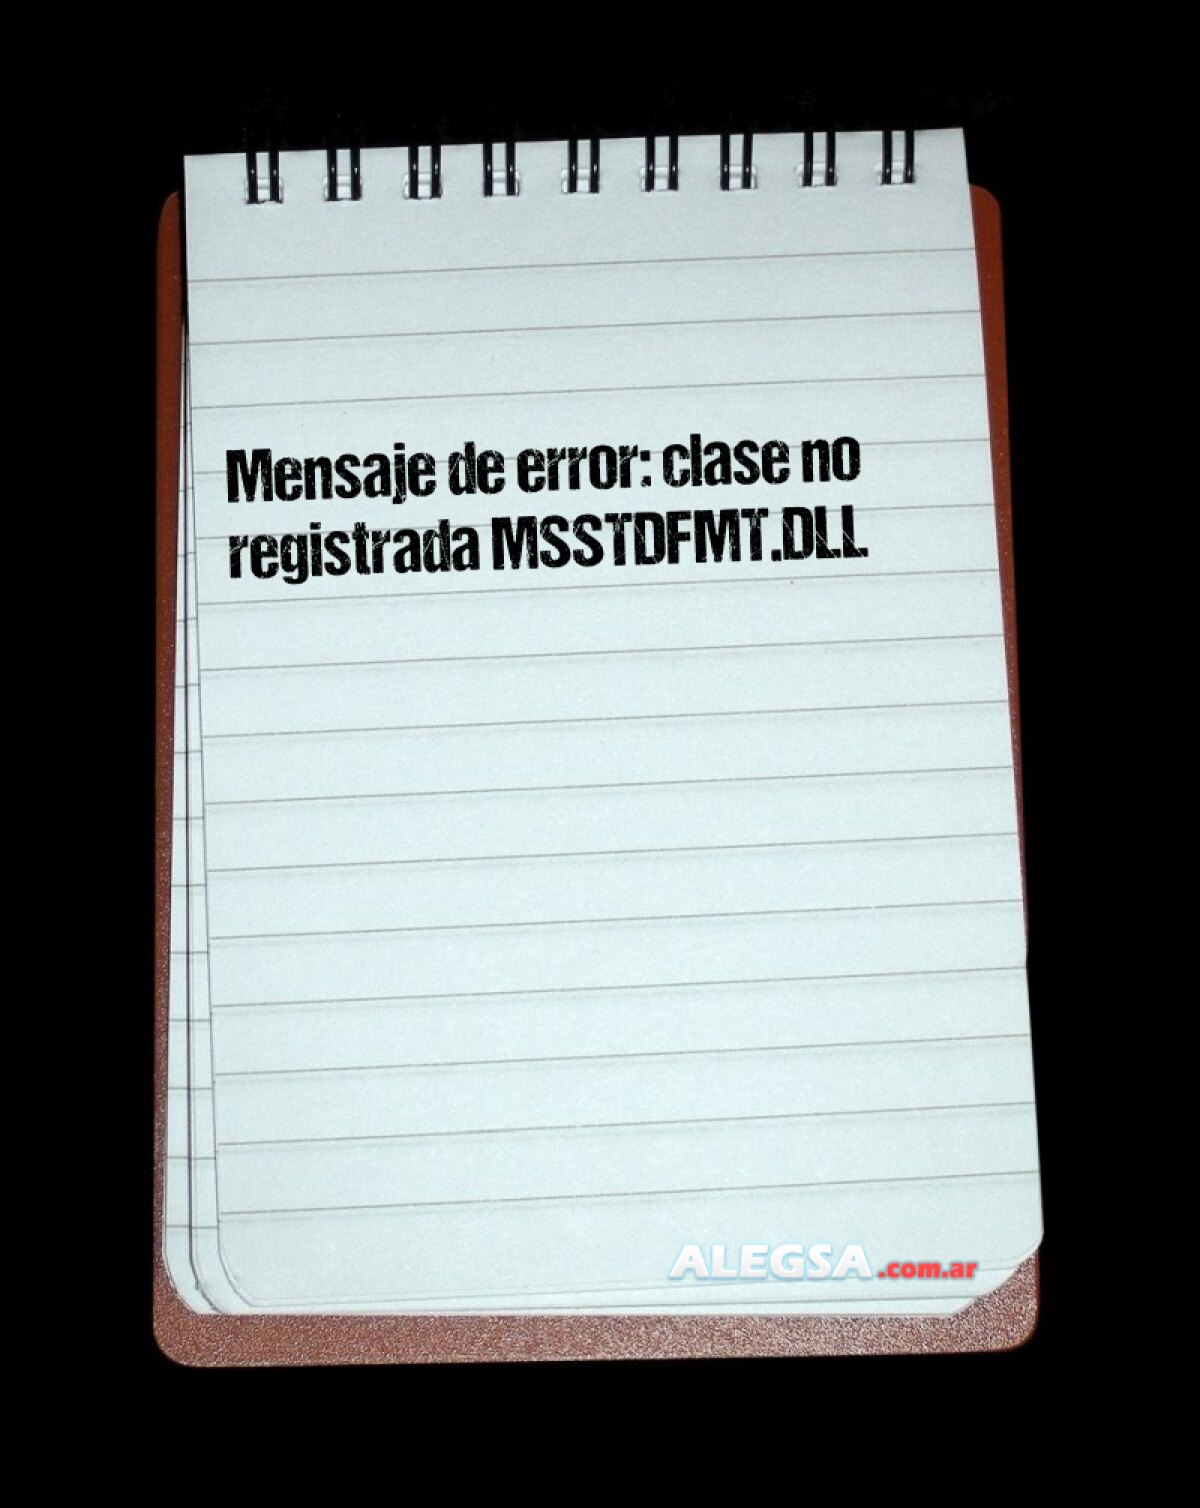 Mensaje de error: clase no registrada MSSTDFMT.DLL